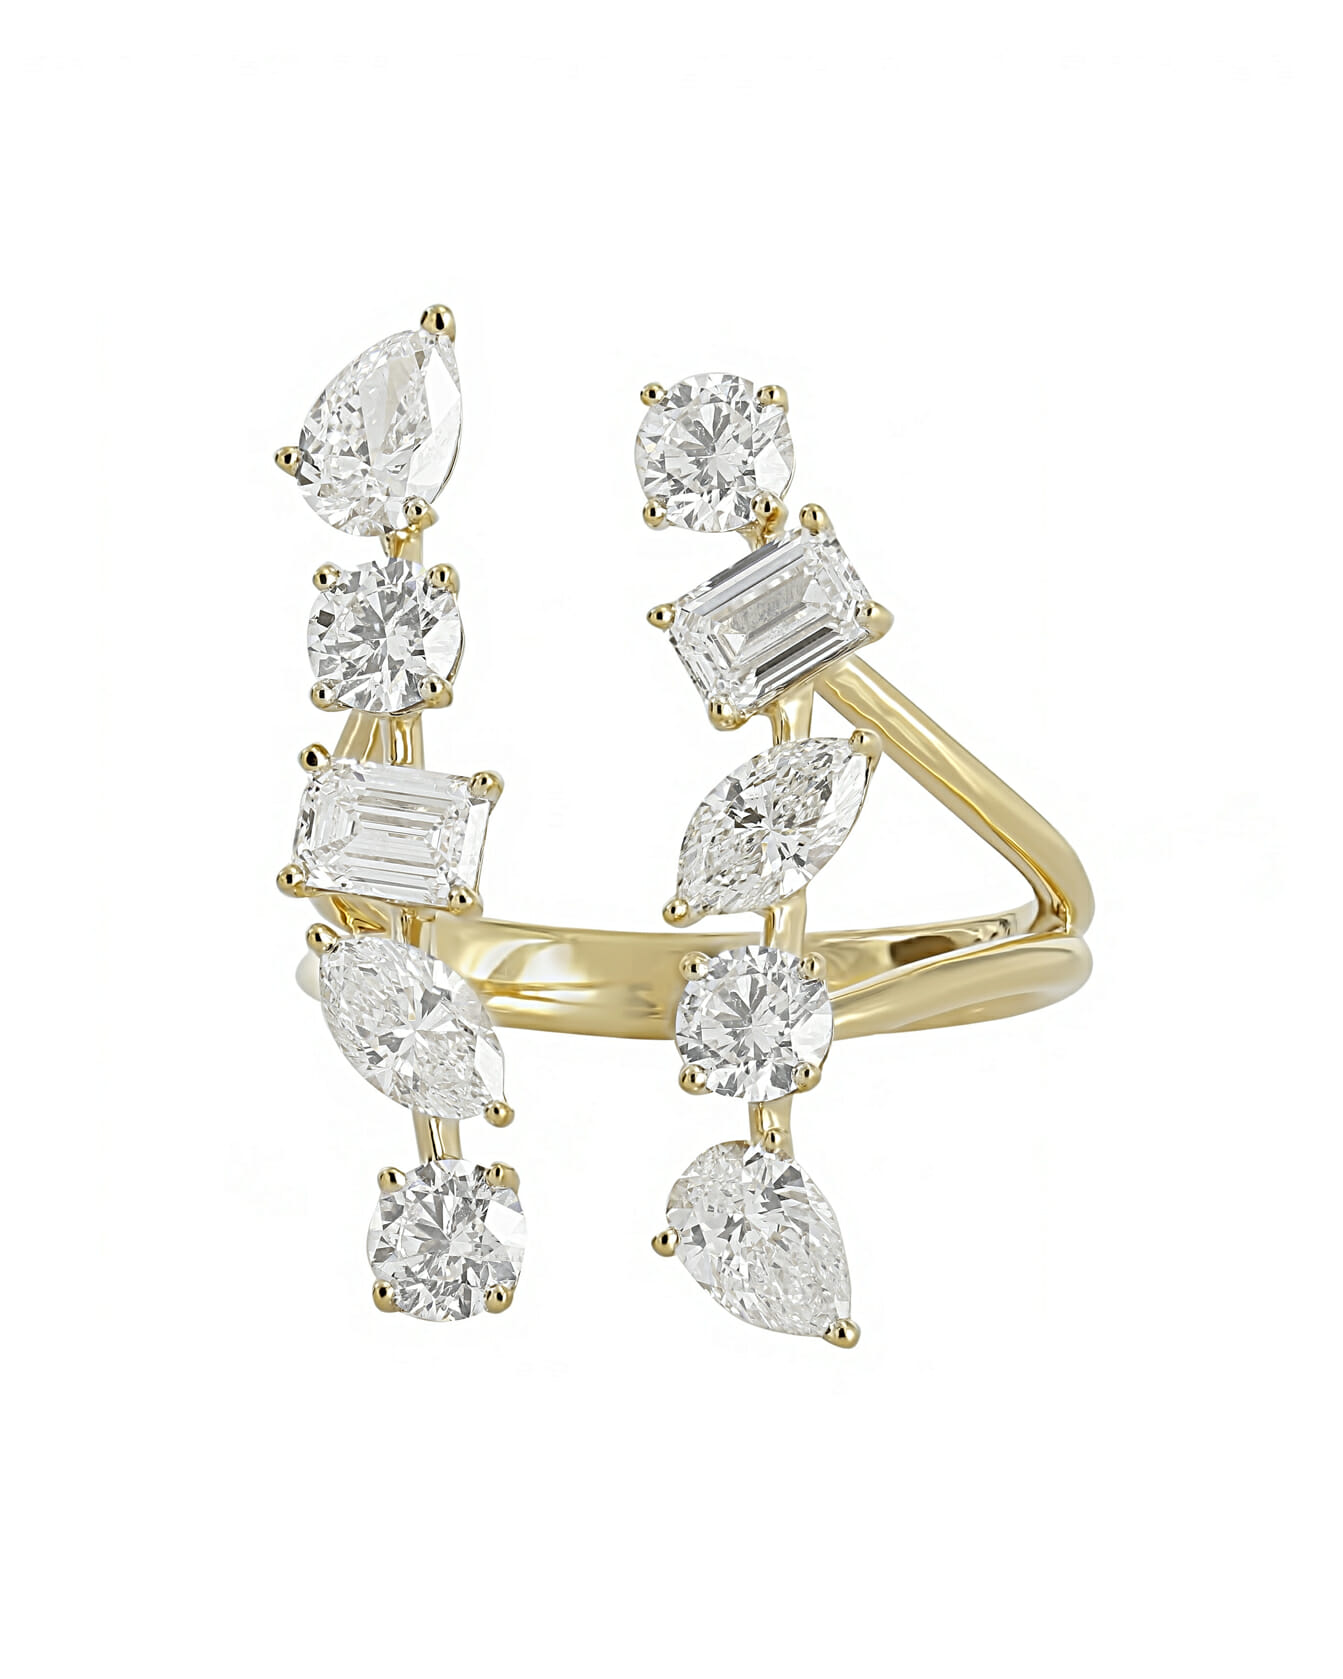 London jewelers mixed cut diamond ring